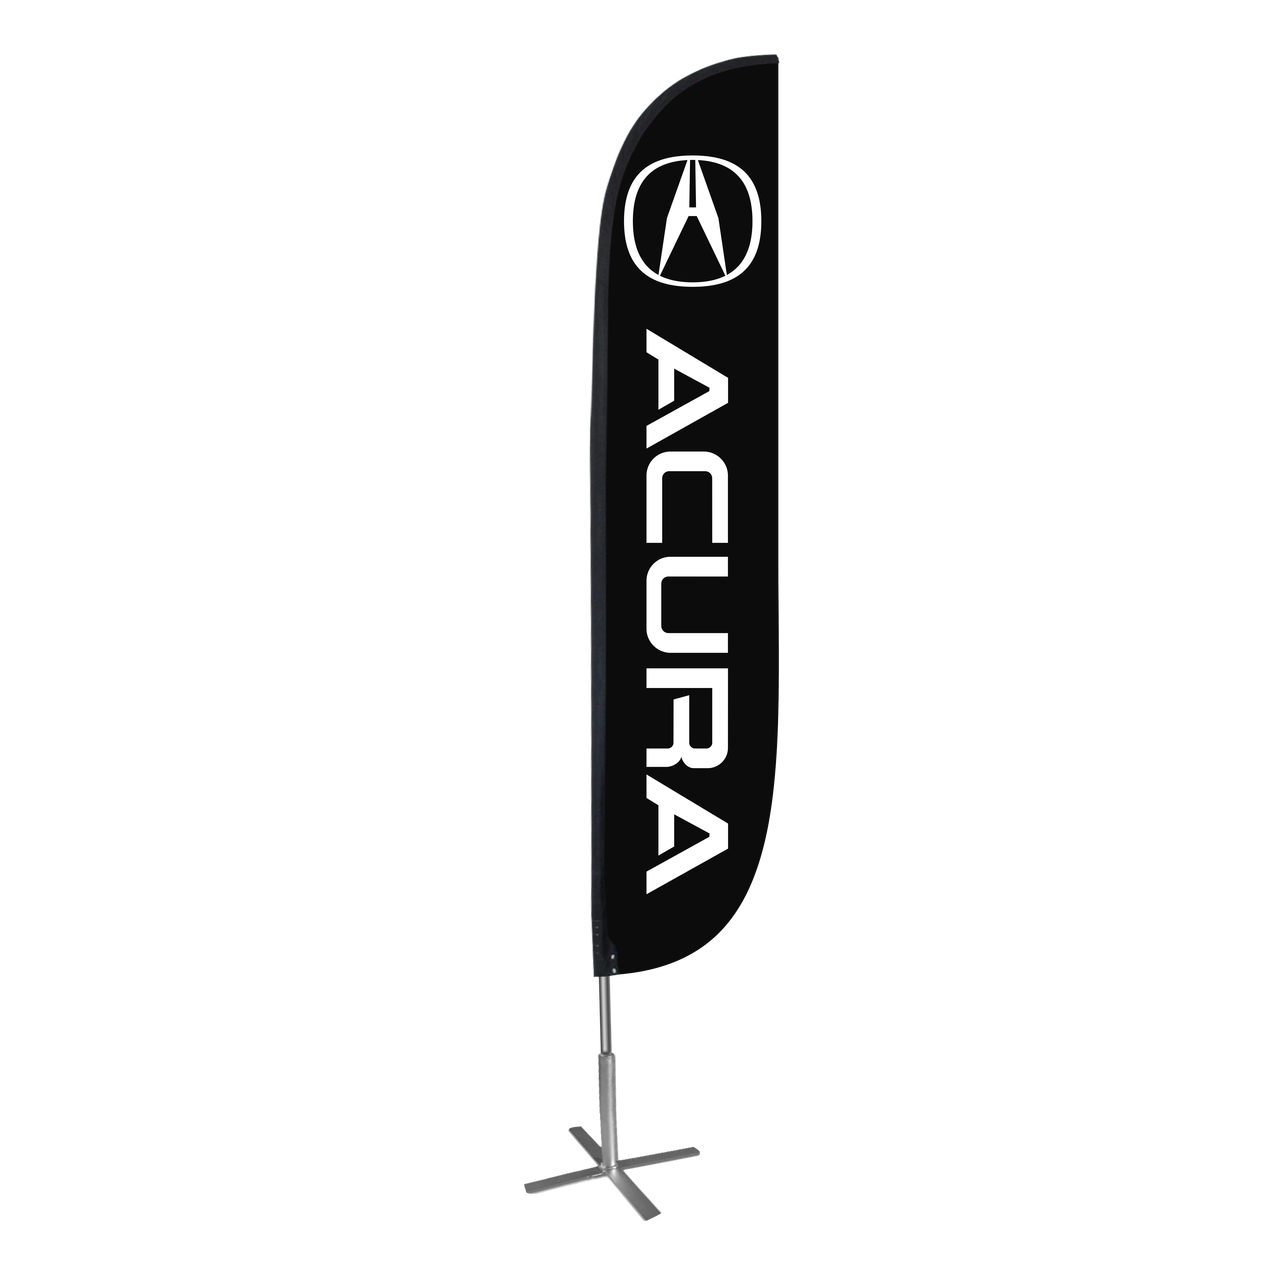 12ft Acura Feather Flag